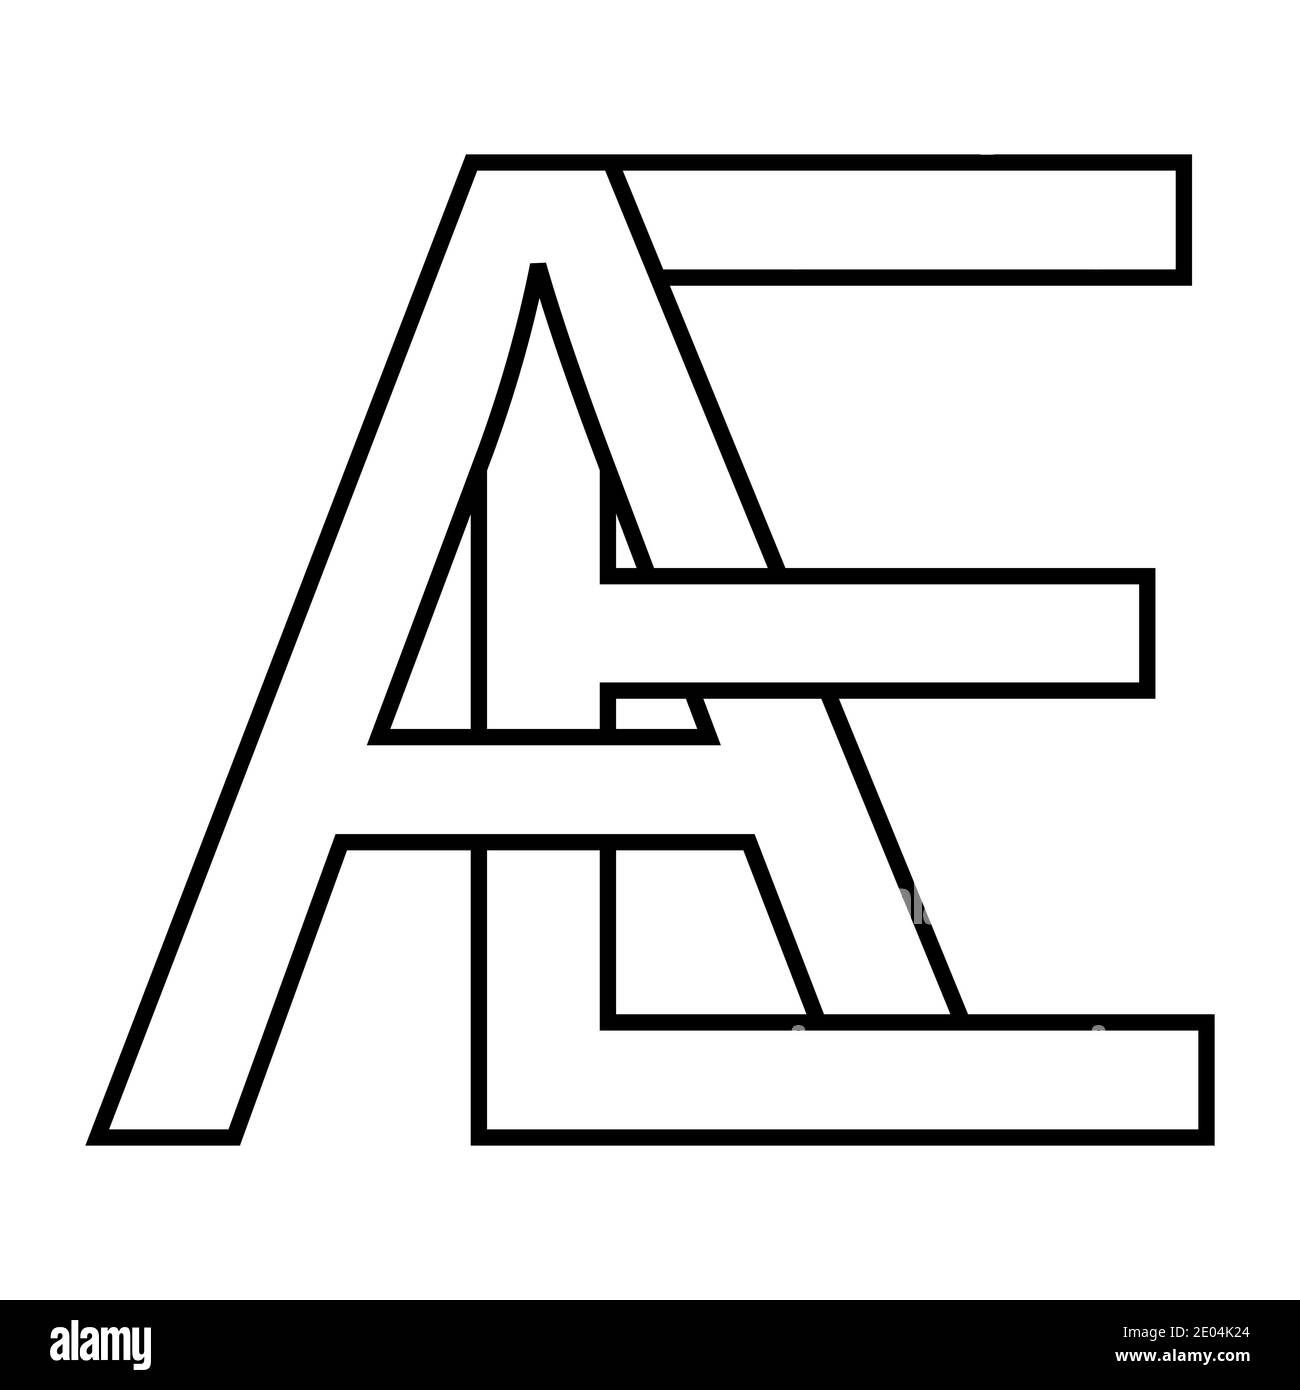 Logo ae Symbol Zeichen zwei Zeilensprungbuchstaben A E, Vektor-Logo ae ersten Großbuchstaben Muster Alphabet a e Stock Vektor